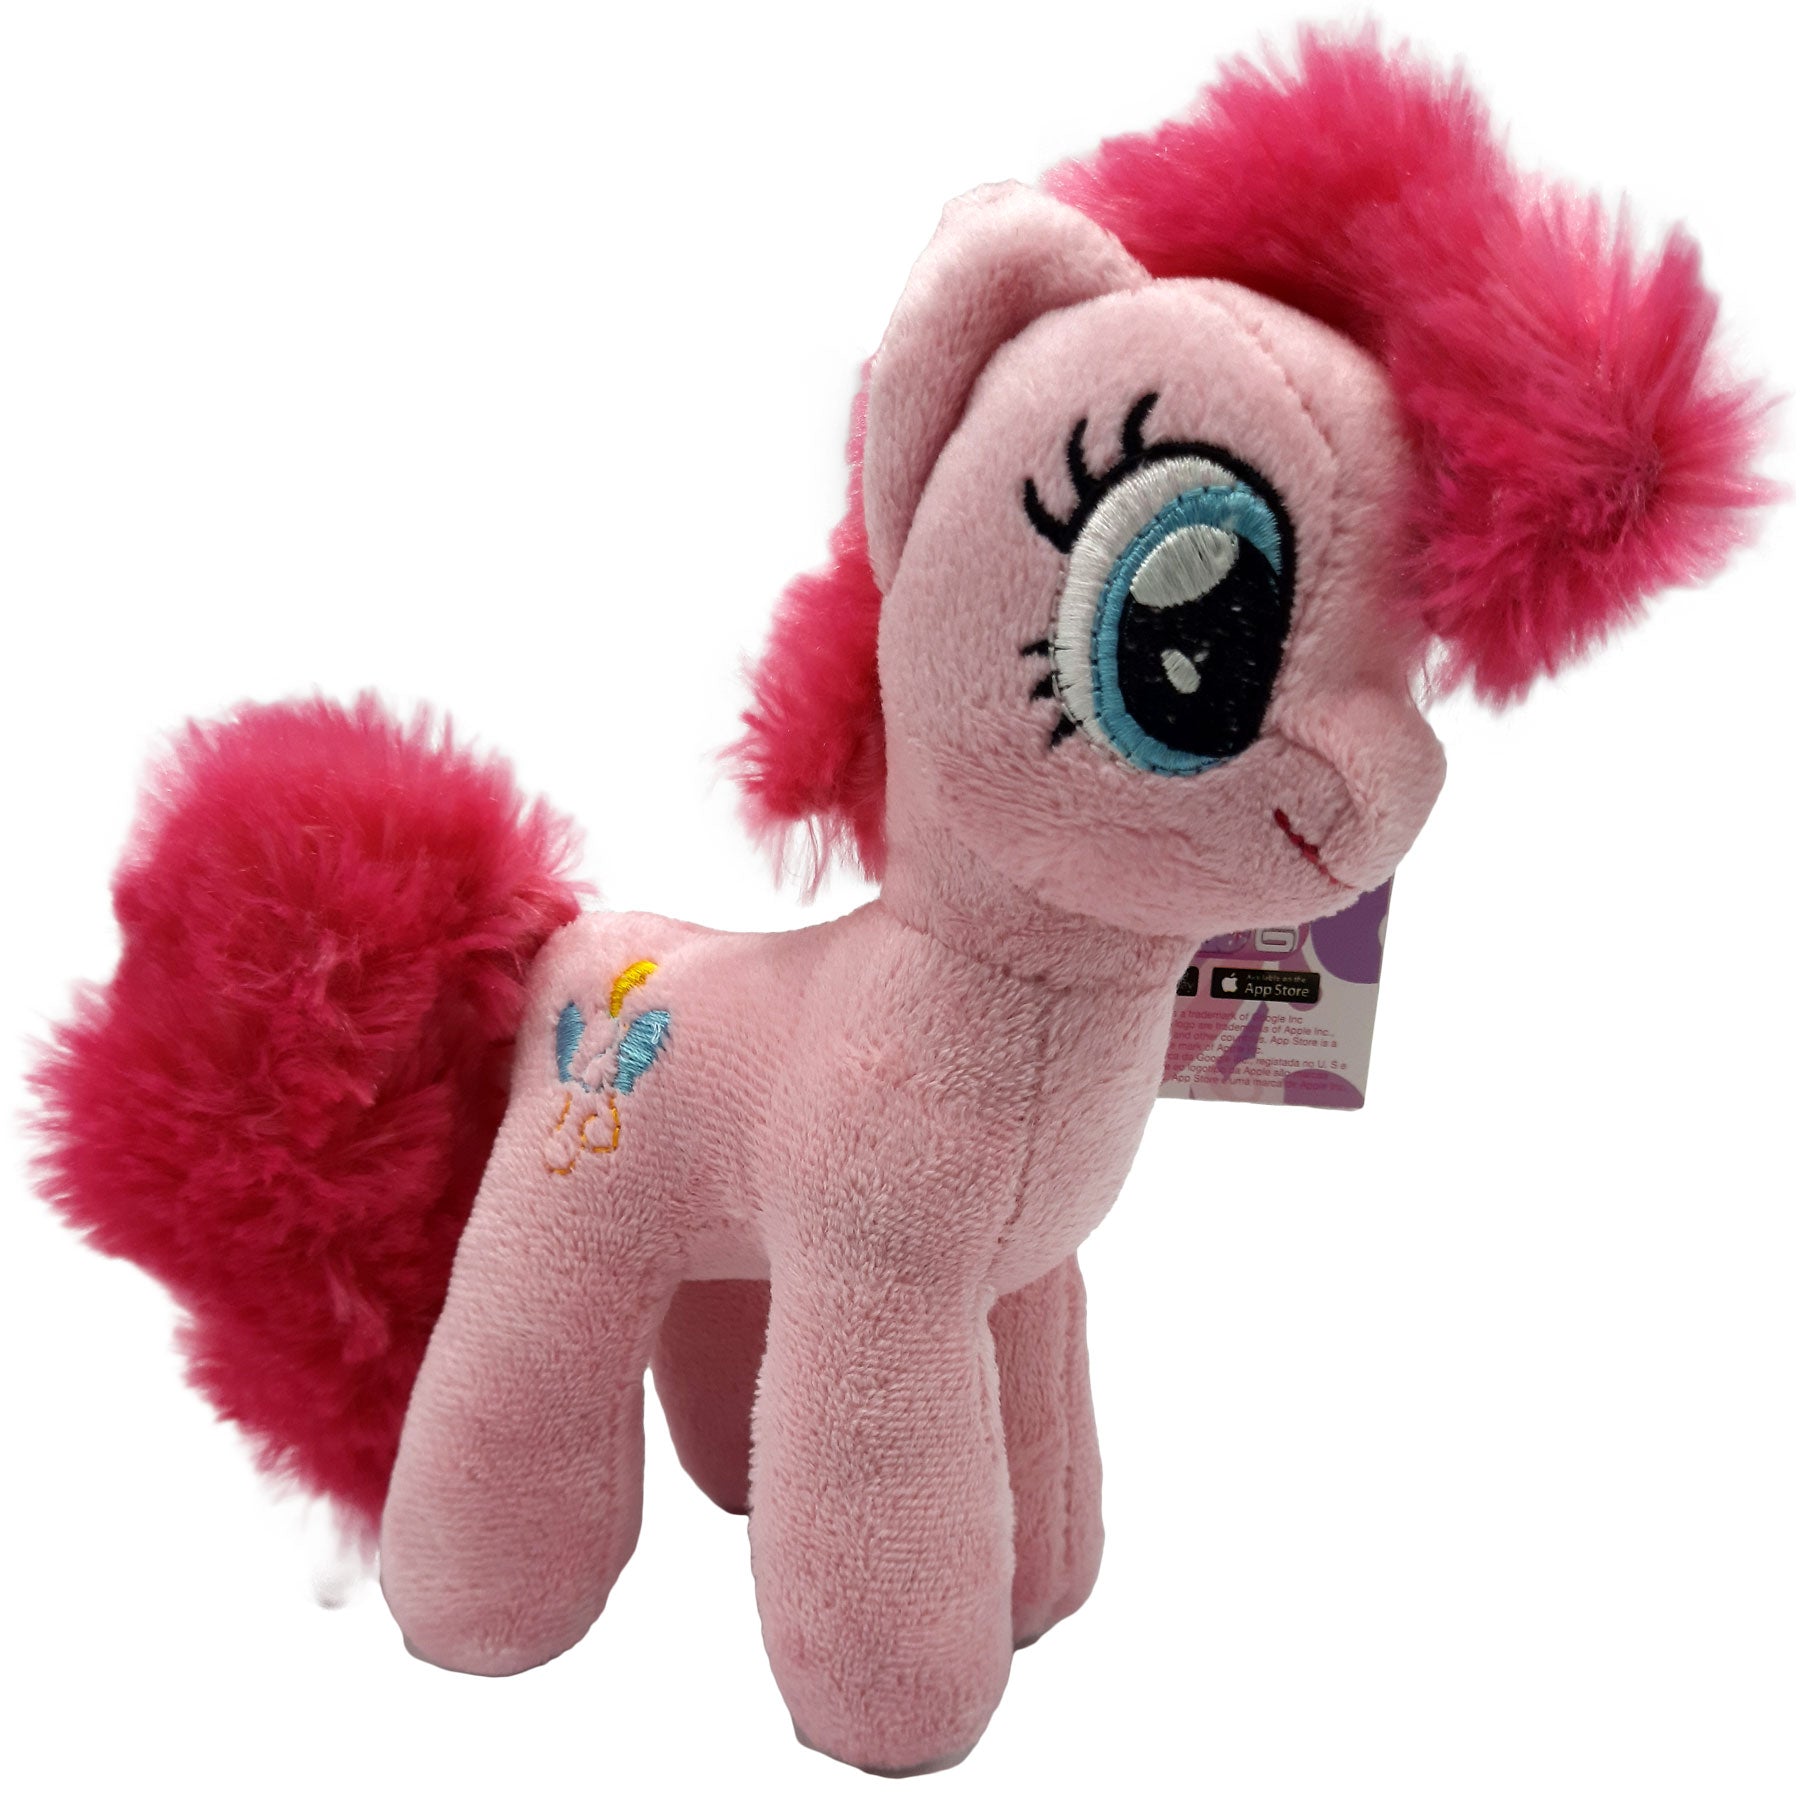 recept Ook serveerster My Little Pony - Pinkie Pie knuffel (roze) | Toytraders.nl